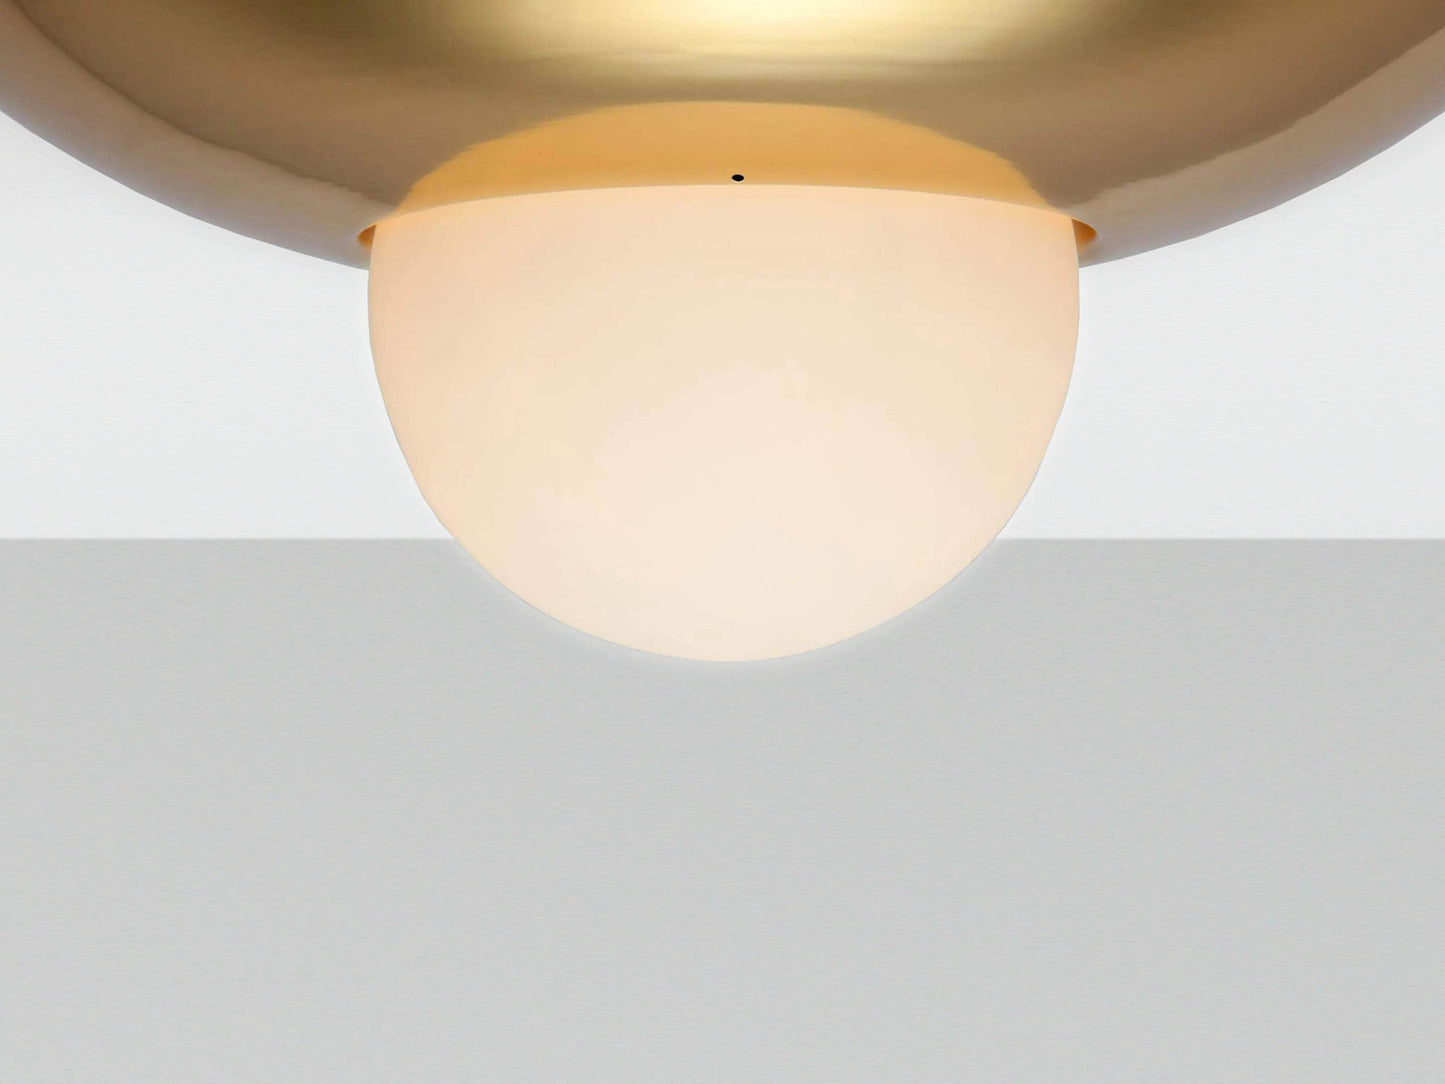 Brass dome flush ceiling light